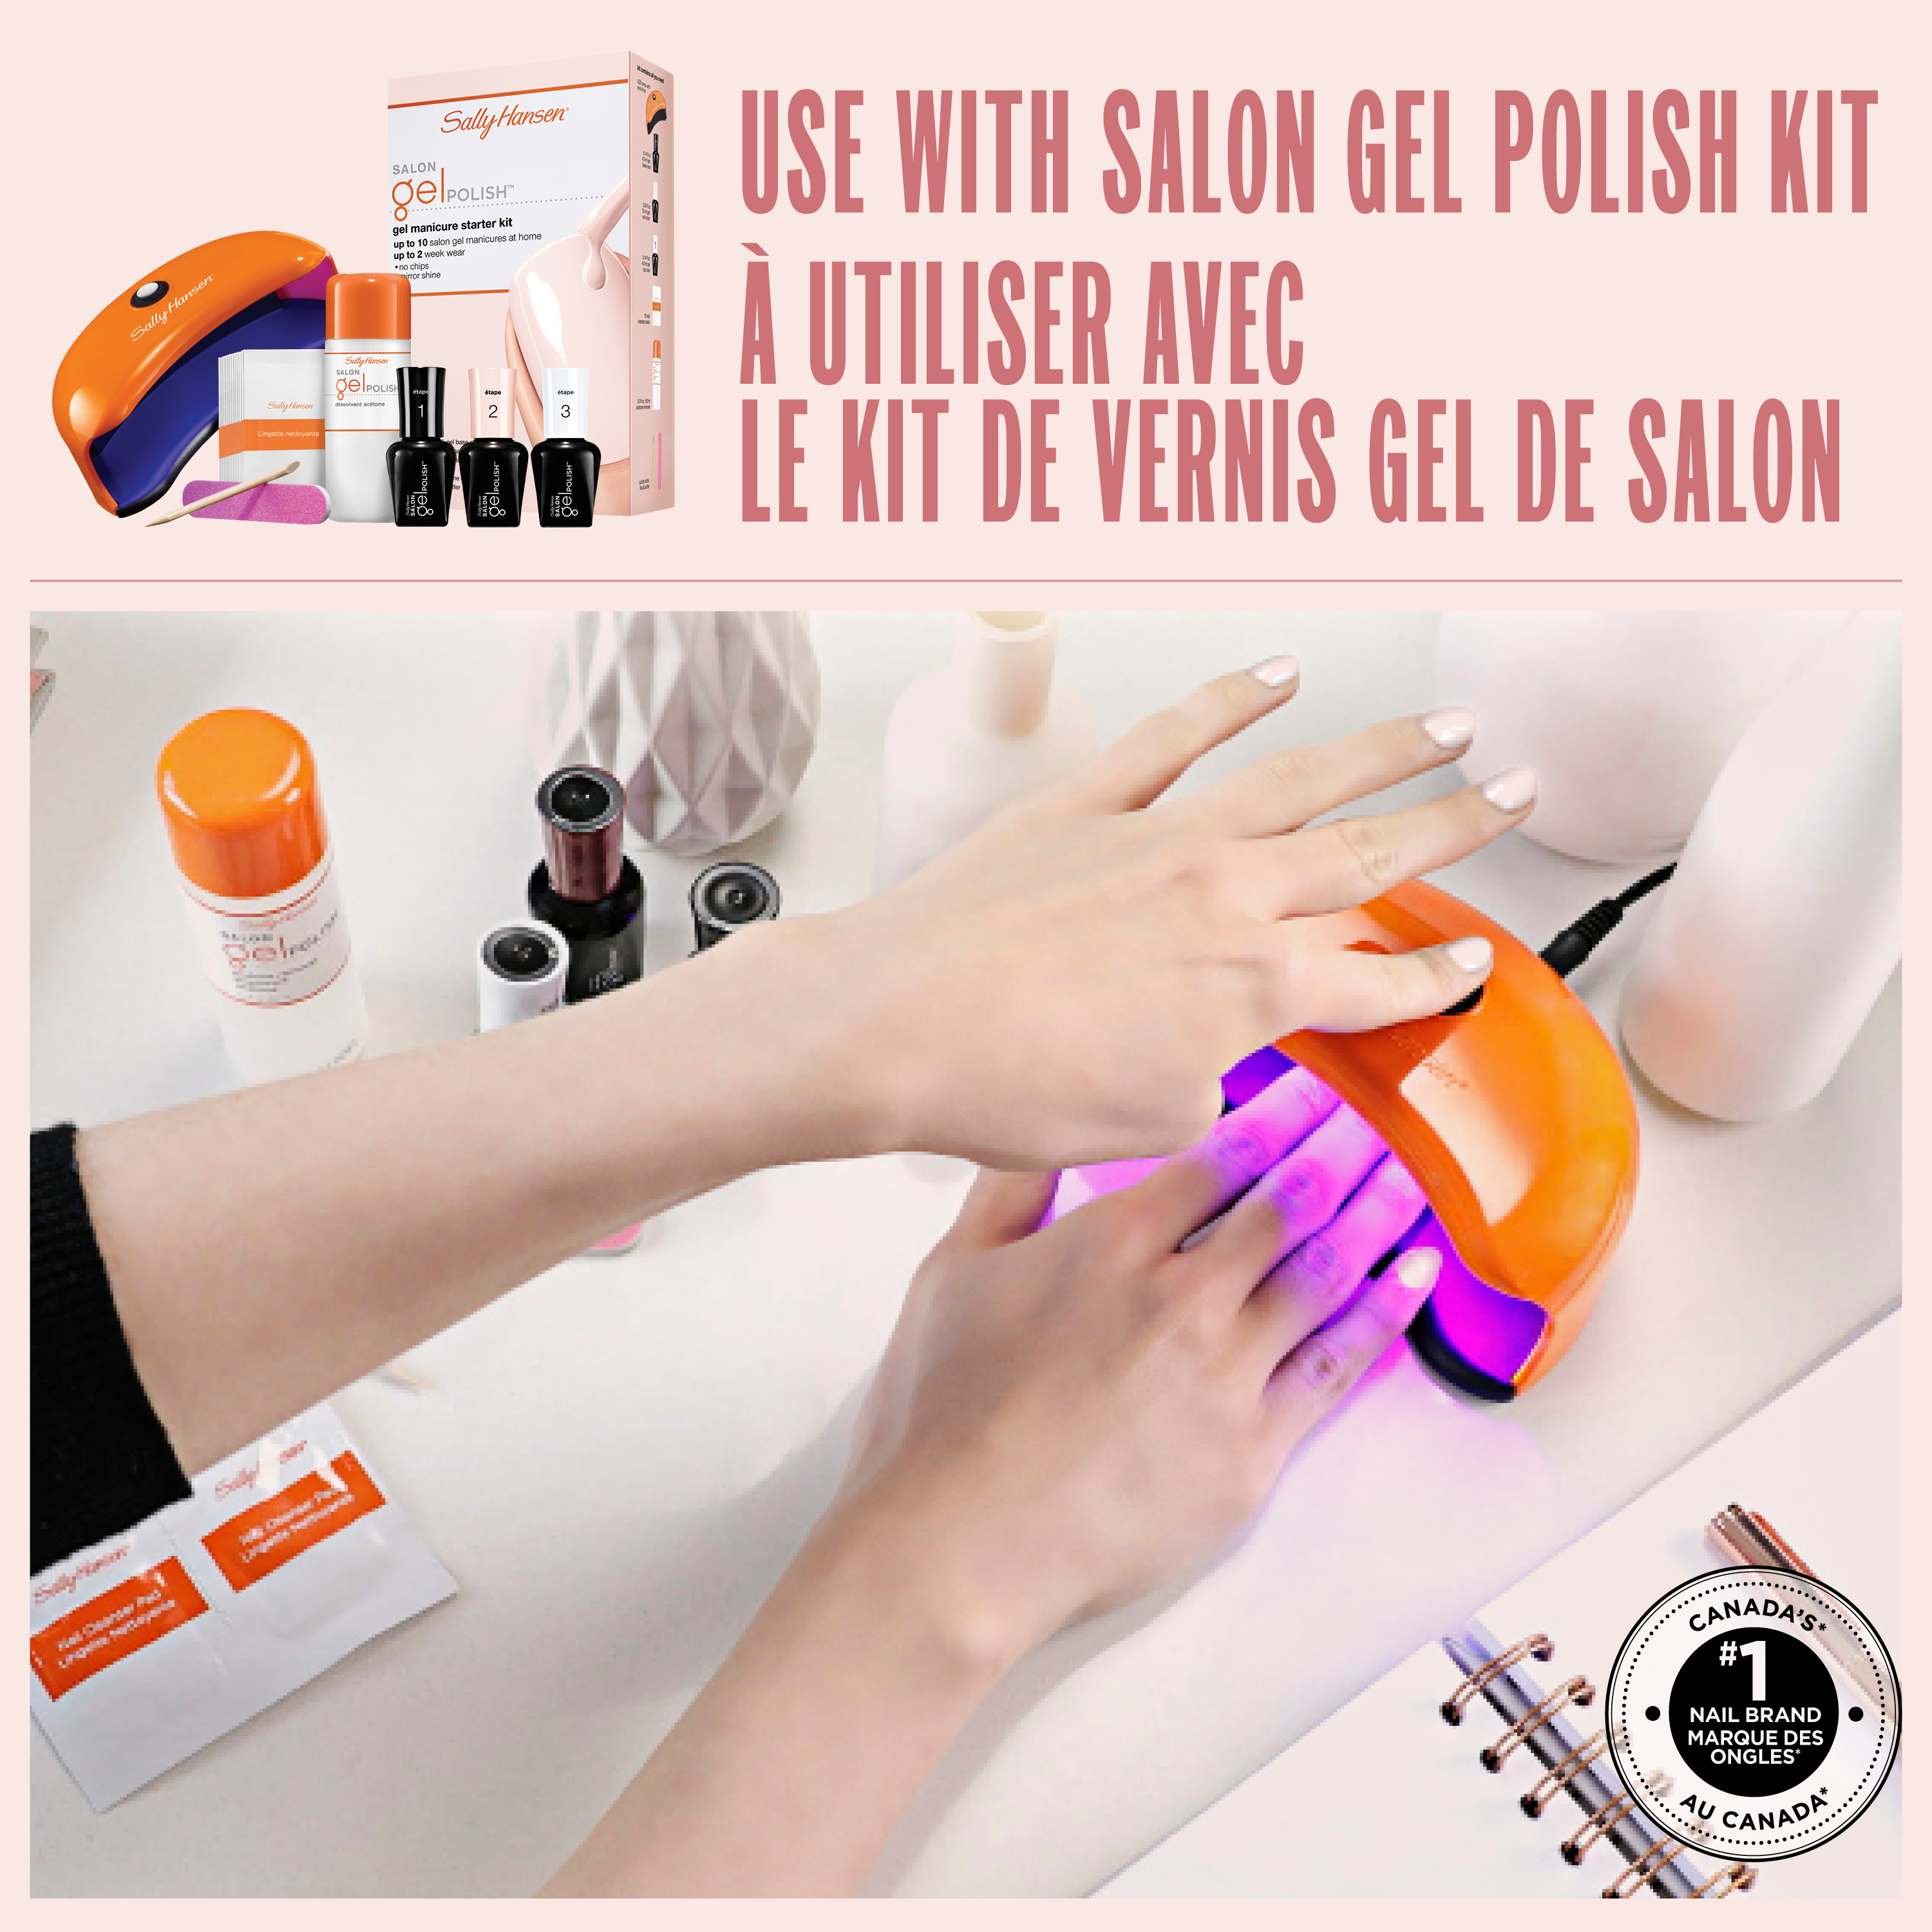 Sally Hansen Salon Gel Polish Nail Color, 0.25 oz - image 7 of 7